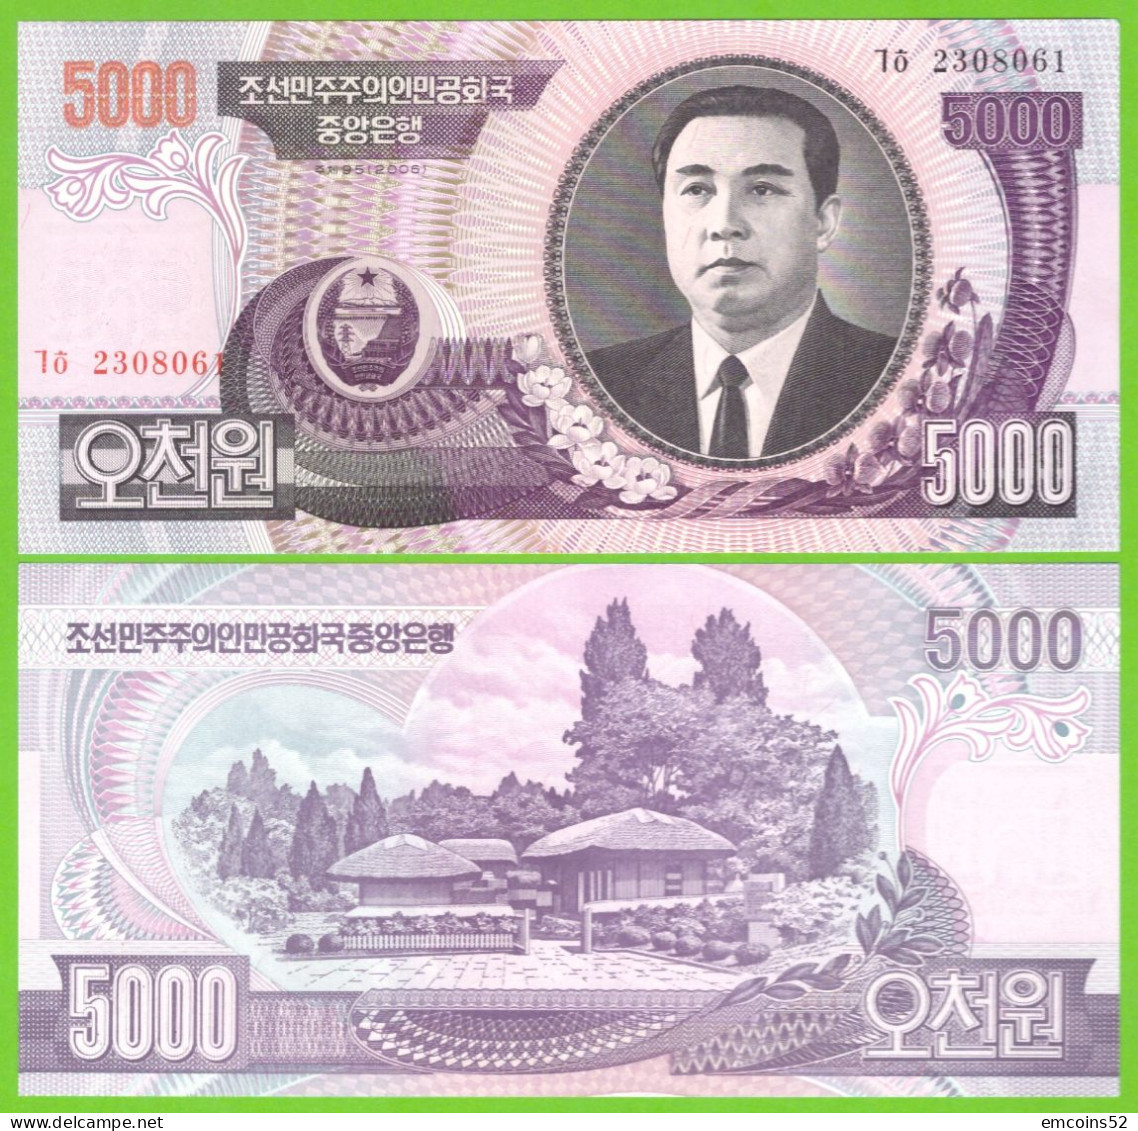 KOREA NORTH 5000 WON 2006 P-46c3 UNC - Corea Del Norte